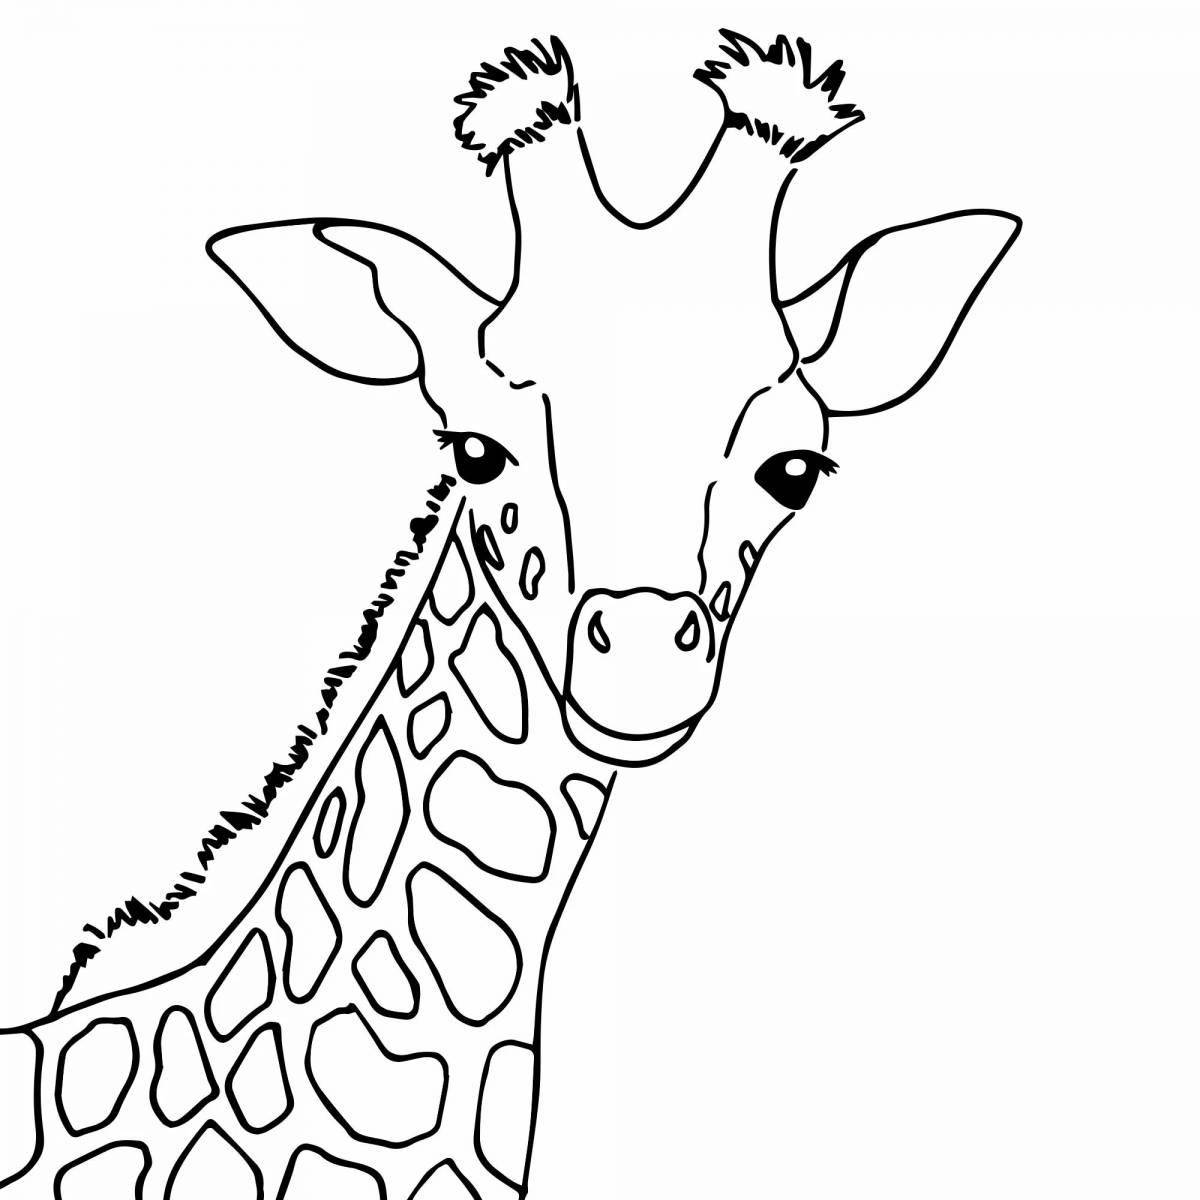 Fun coloring giraffe for kids